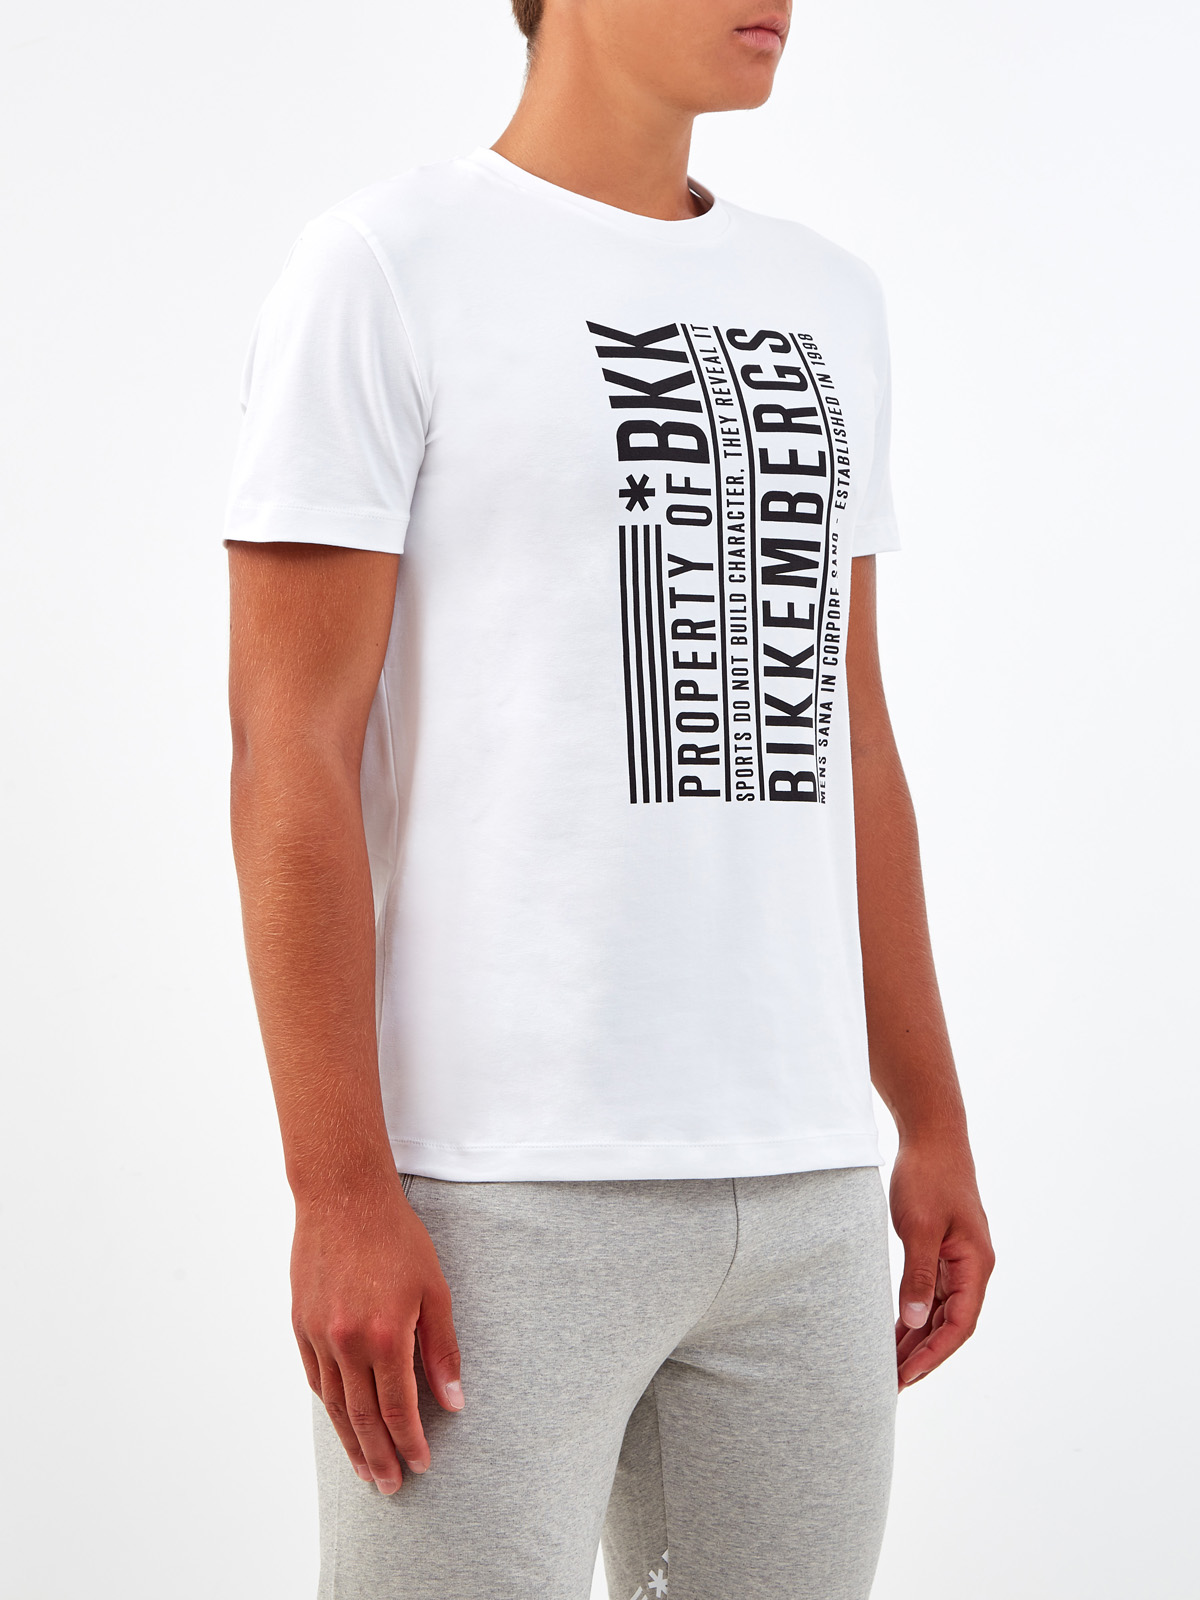 Хлопковая футболка с контрастным принтом Property of BKK BIKKEMBERGS, цвет белый, размер S;L;M - фото 3